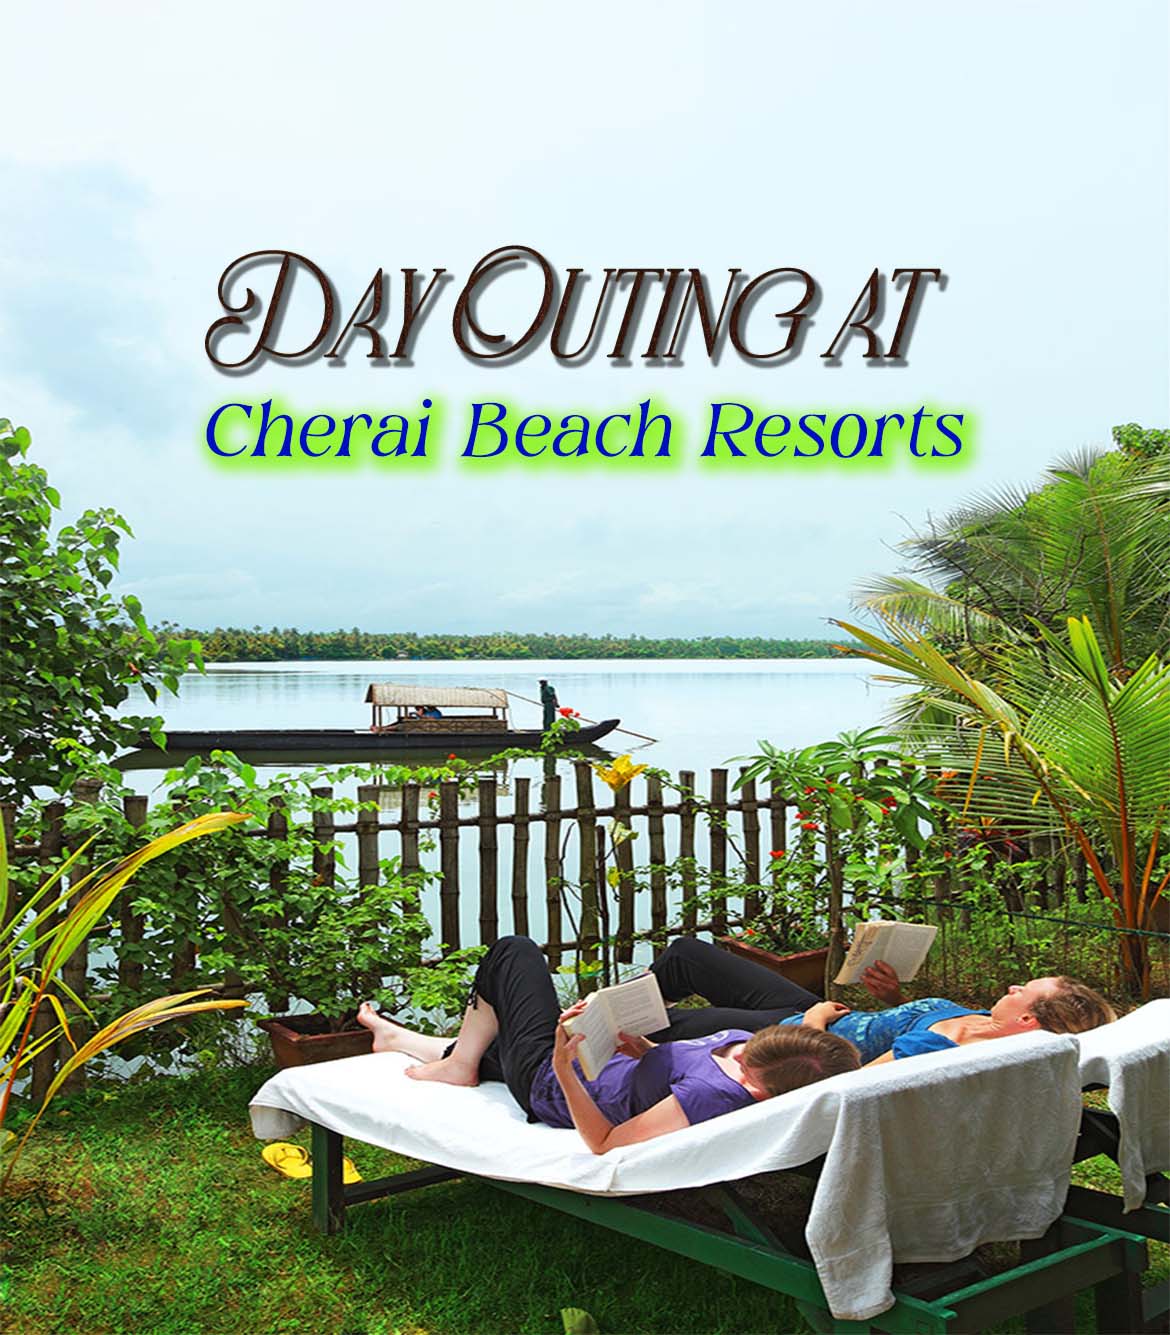 Day Outing at Cherai Beach Resorts